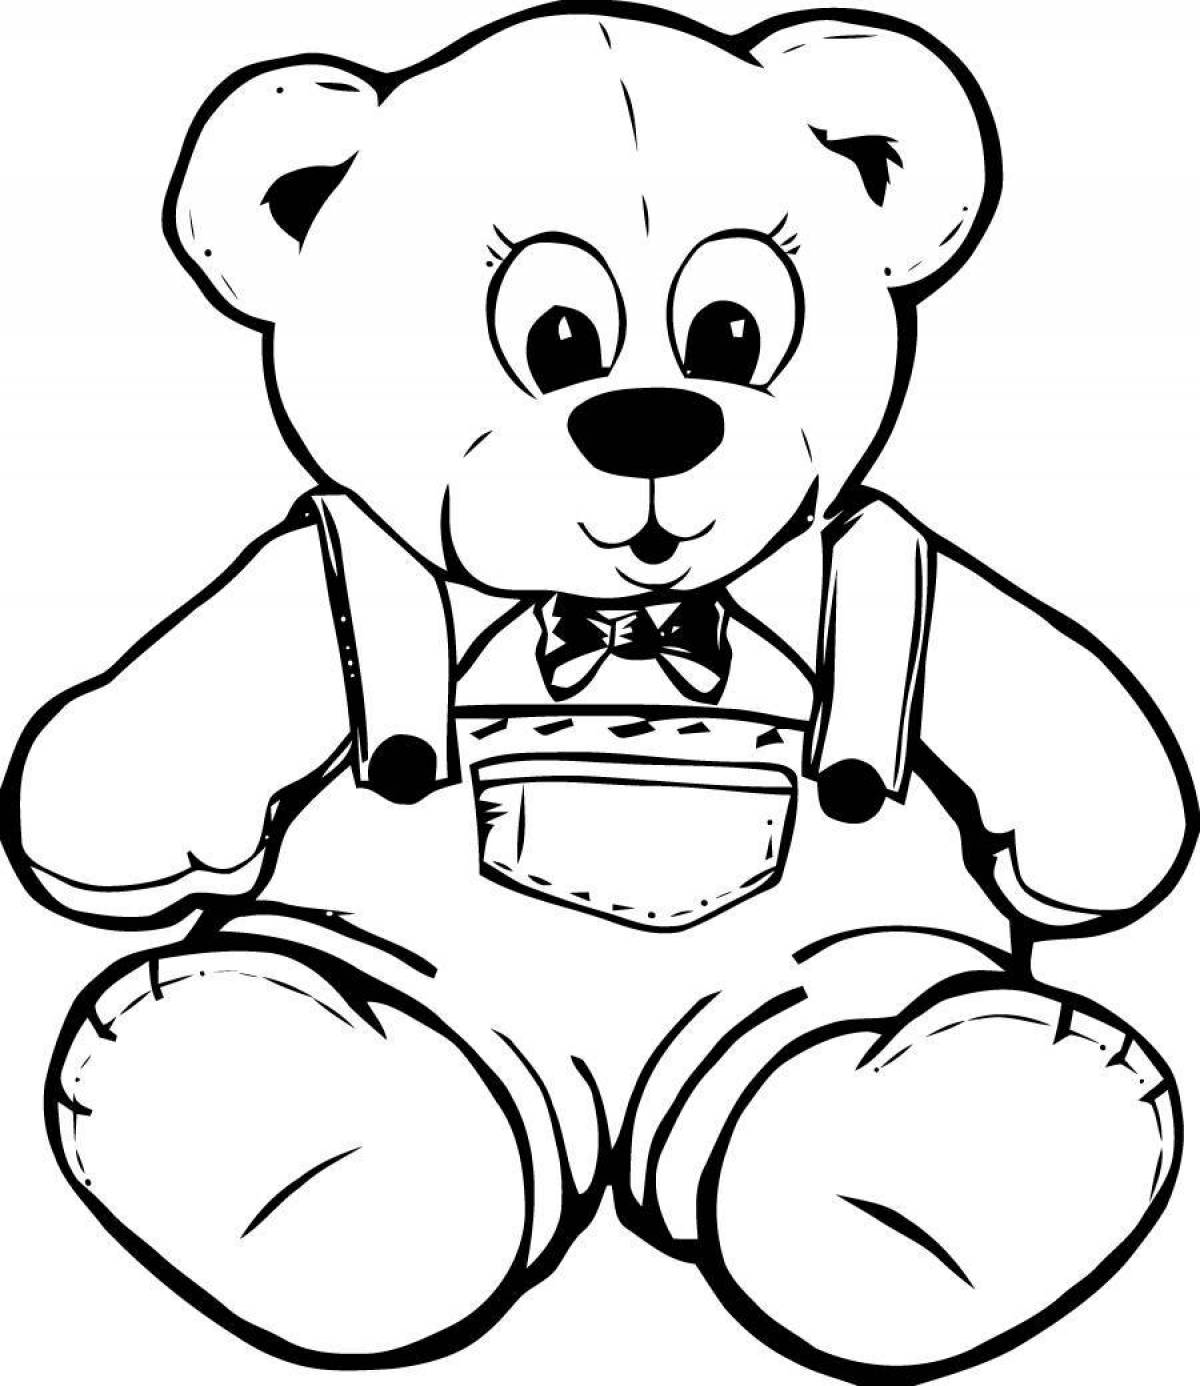 Coloring loving teddy bear